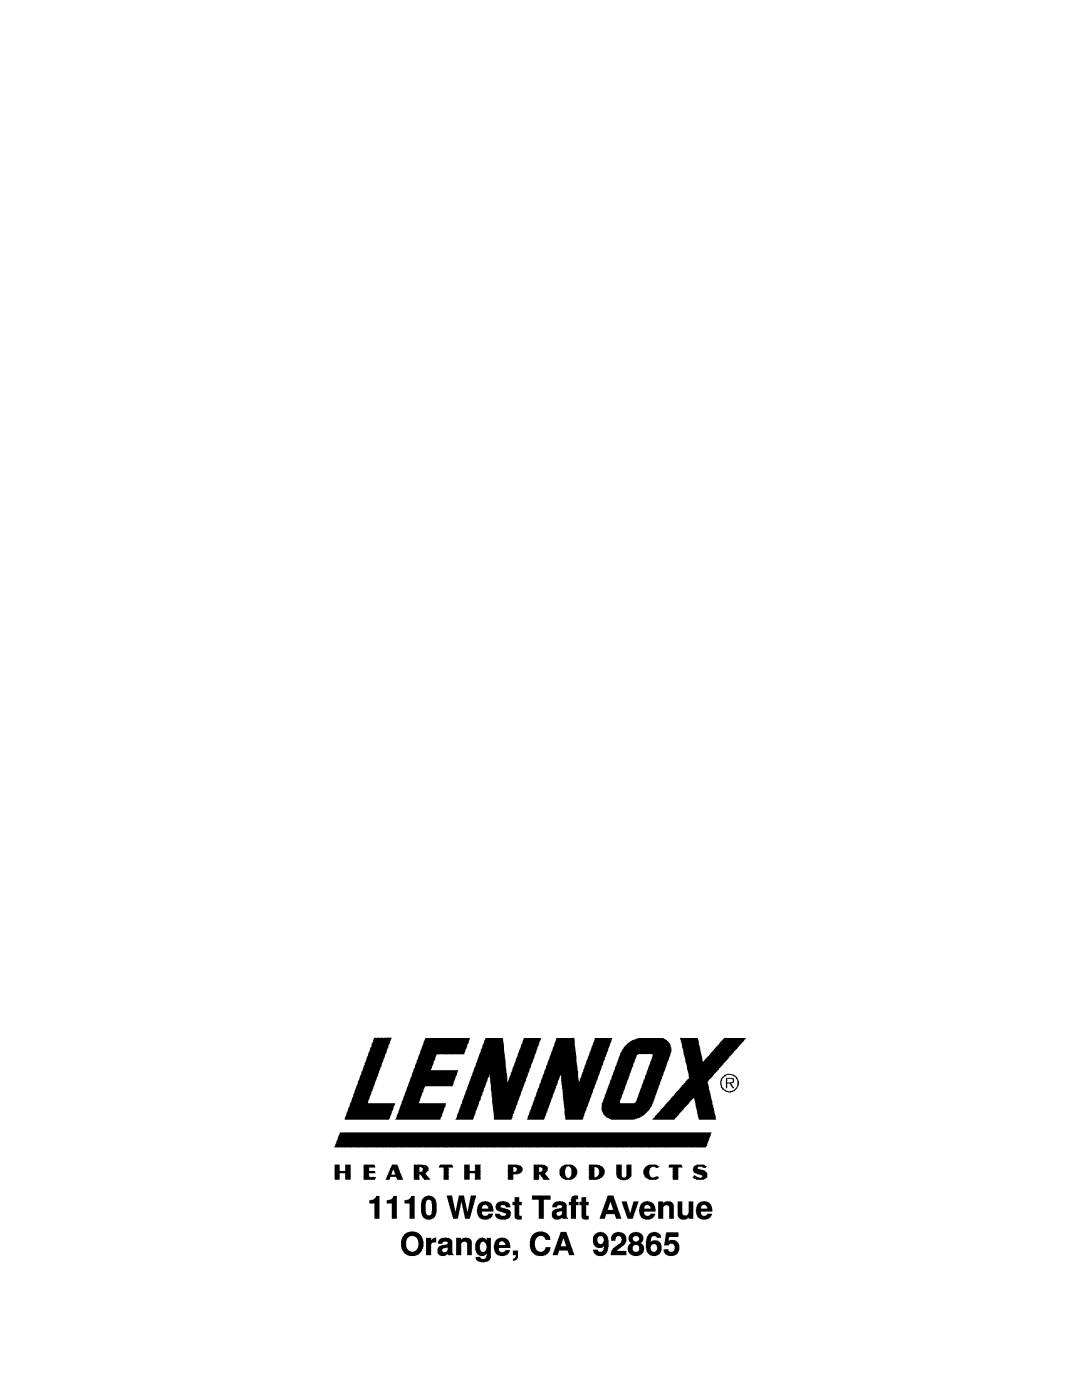 Lenoxx Electronics L30 BF-2 operation manual West Taft Avenue Orange, CA 